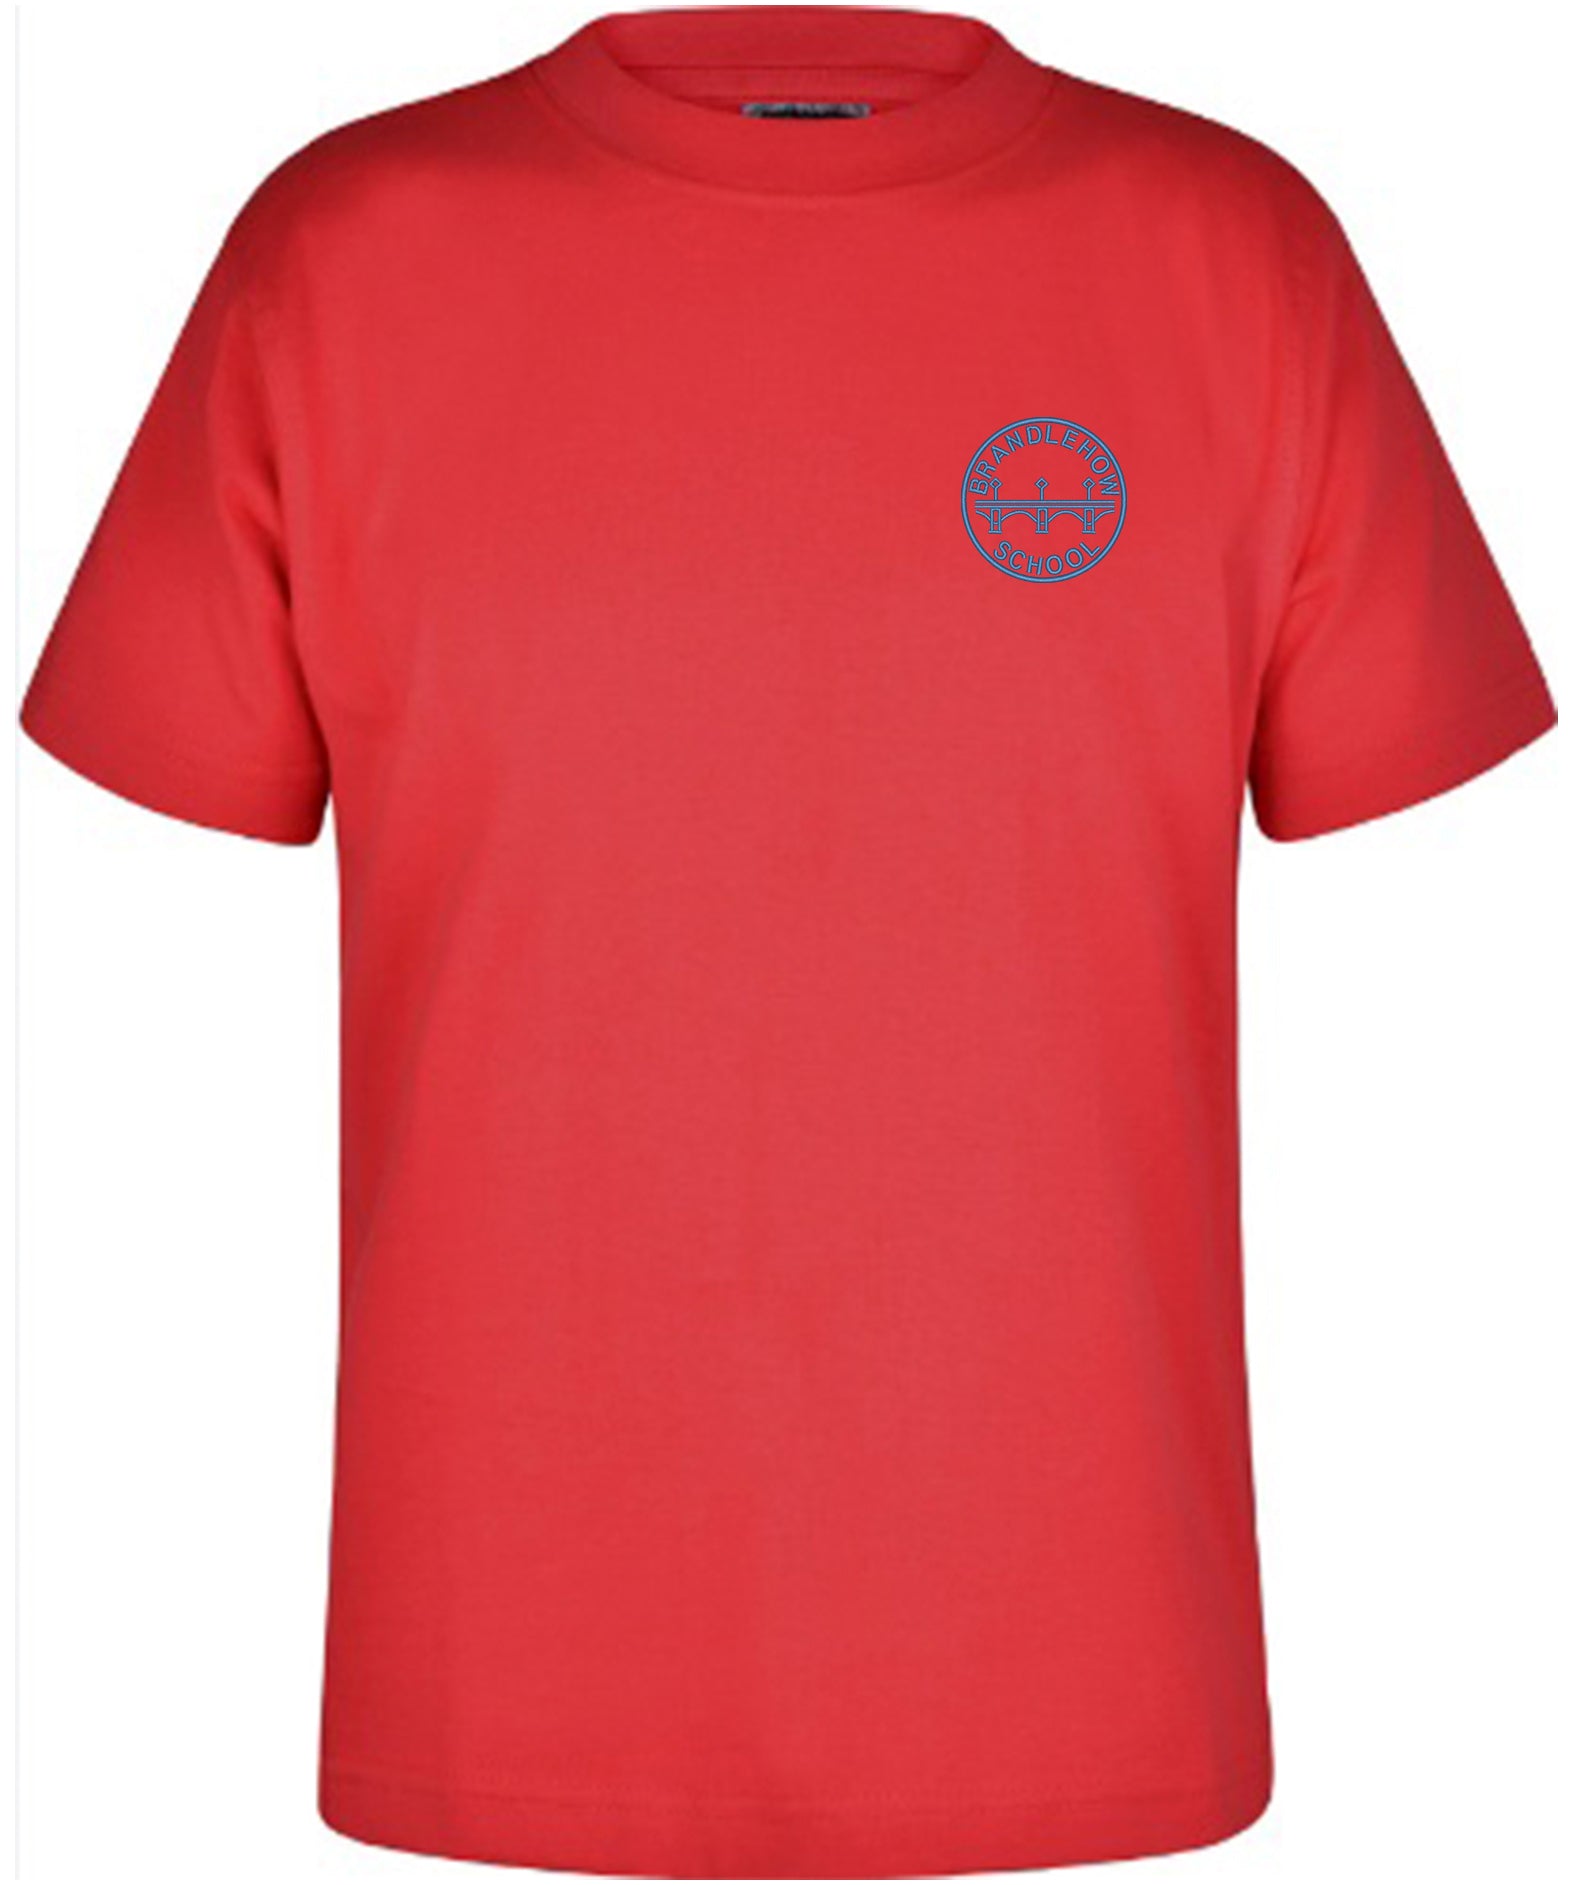 Brandlehow Primary School - Unisex Cotton T-Shirt - Red - School Uniform Shop